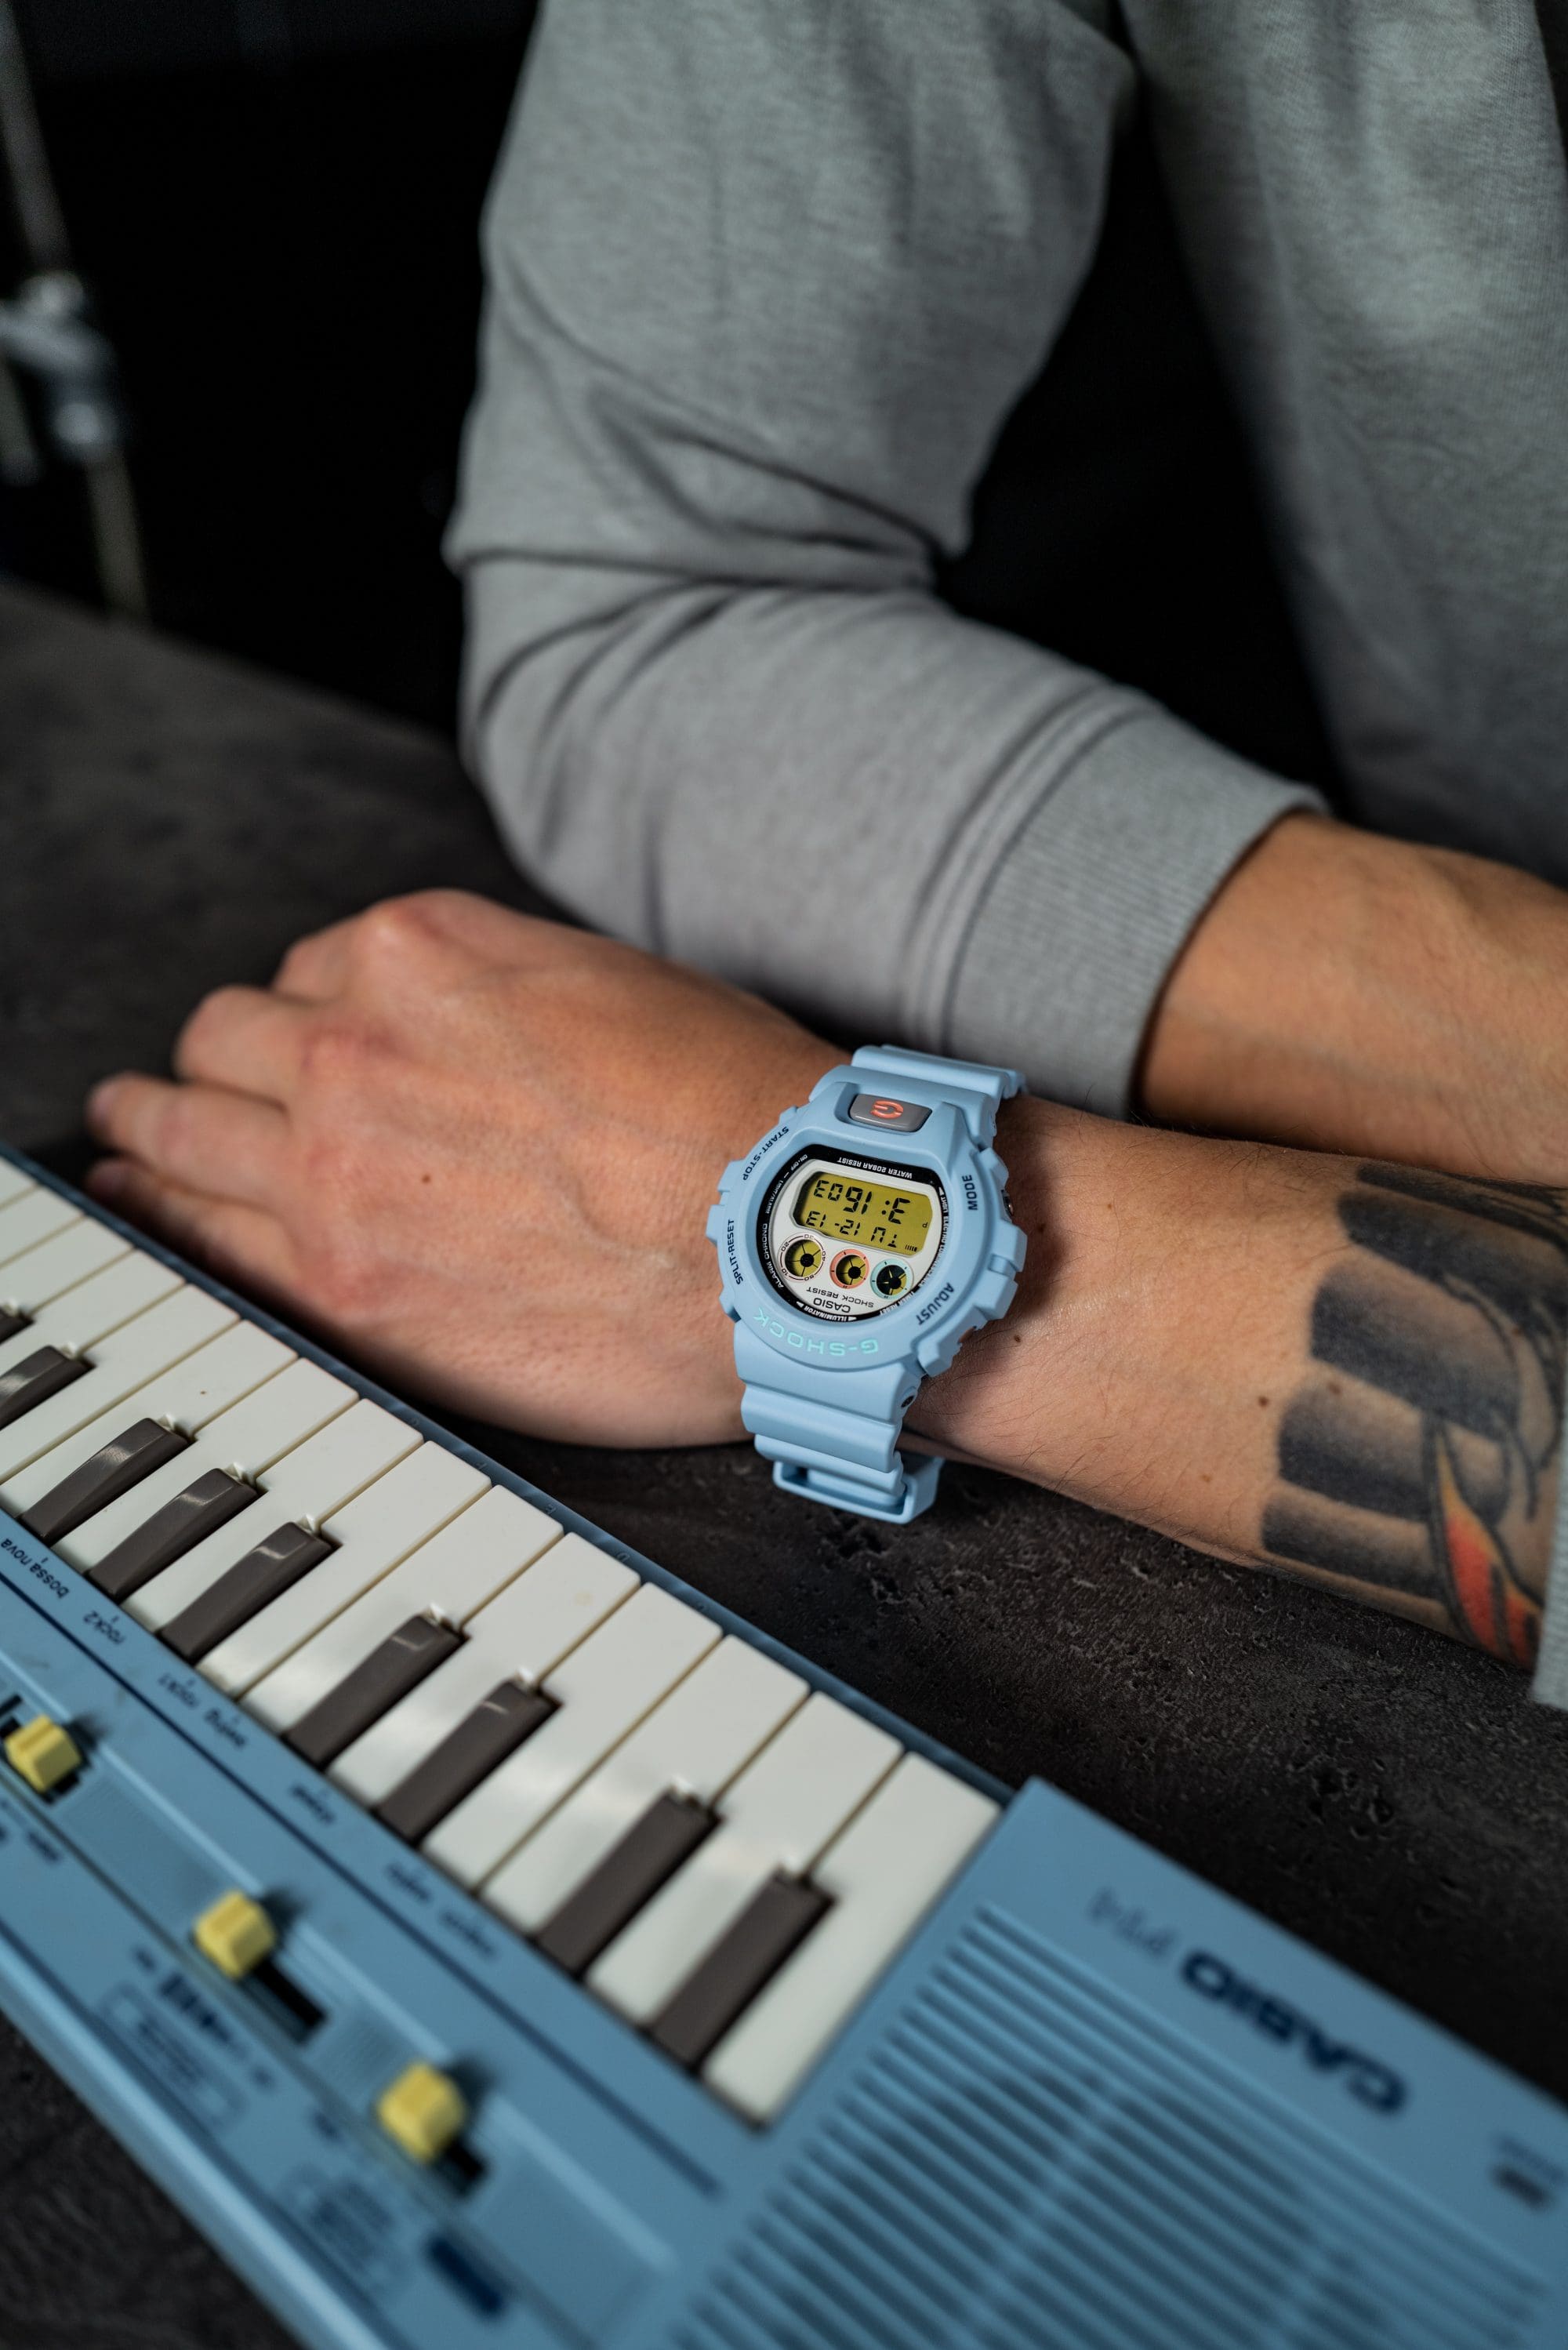 DW6900JM22 Blue watch with matching Casio PT-1 keyboard